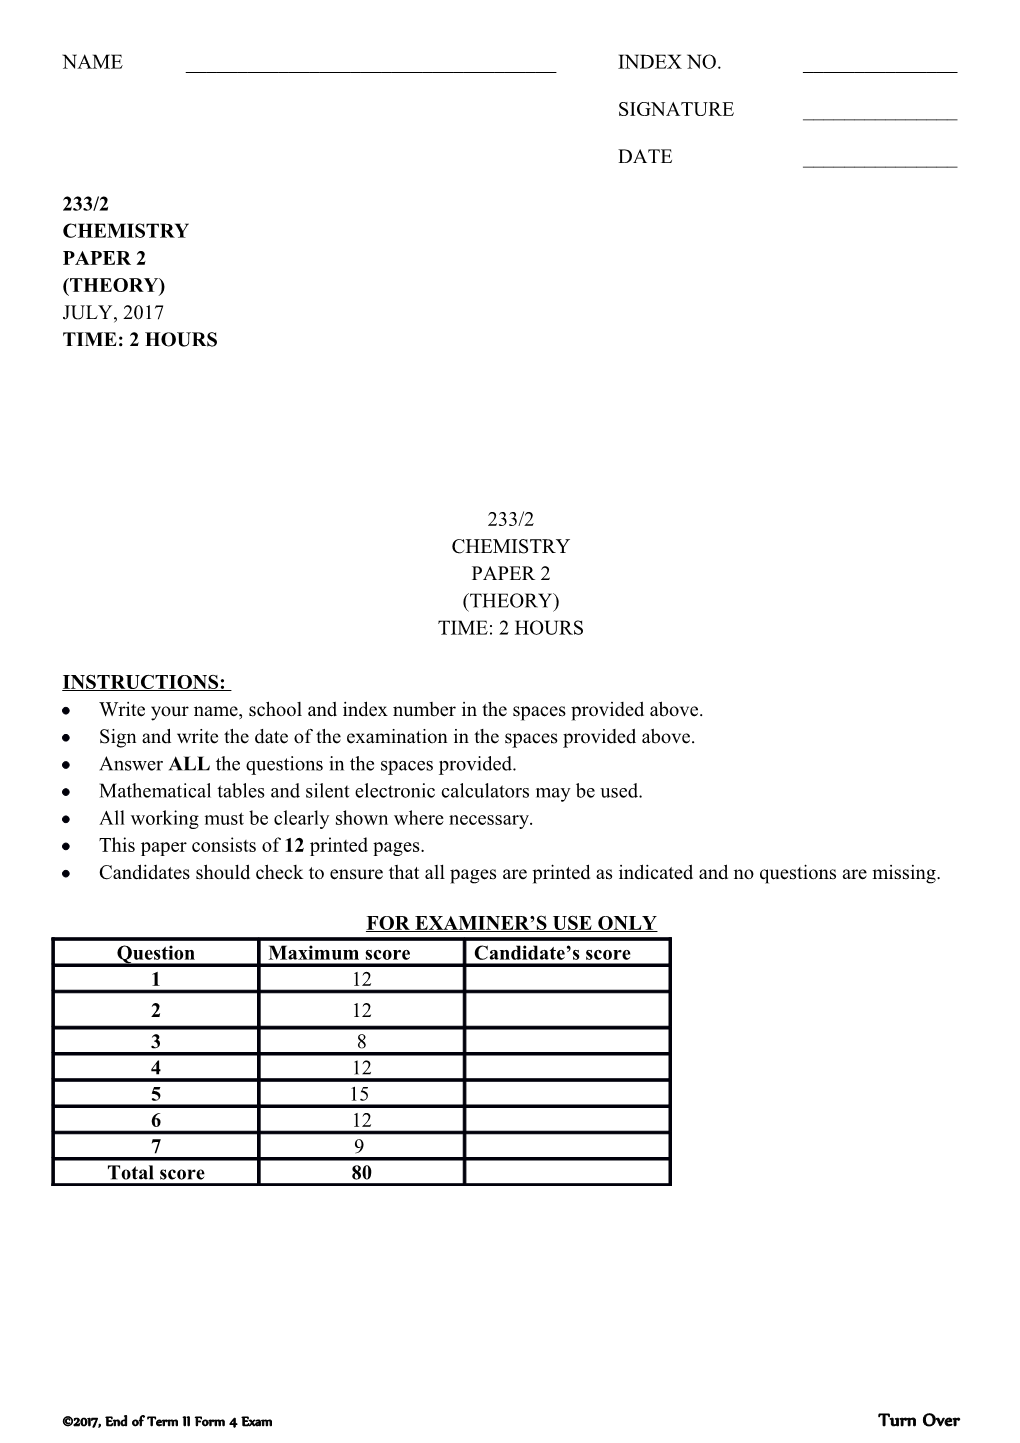 233/2 Chemistry Paper 2 s1